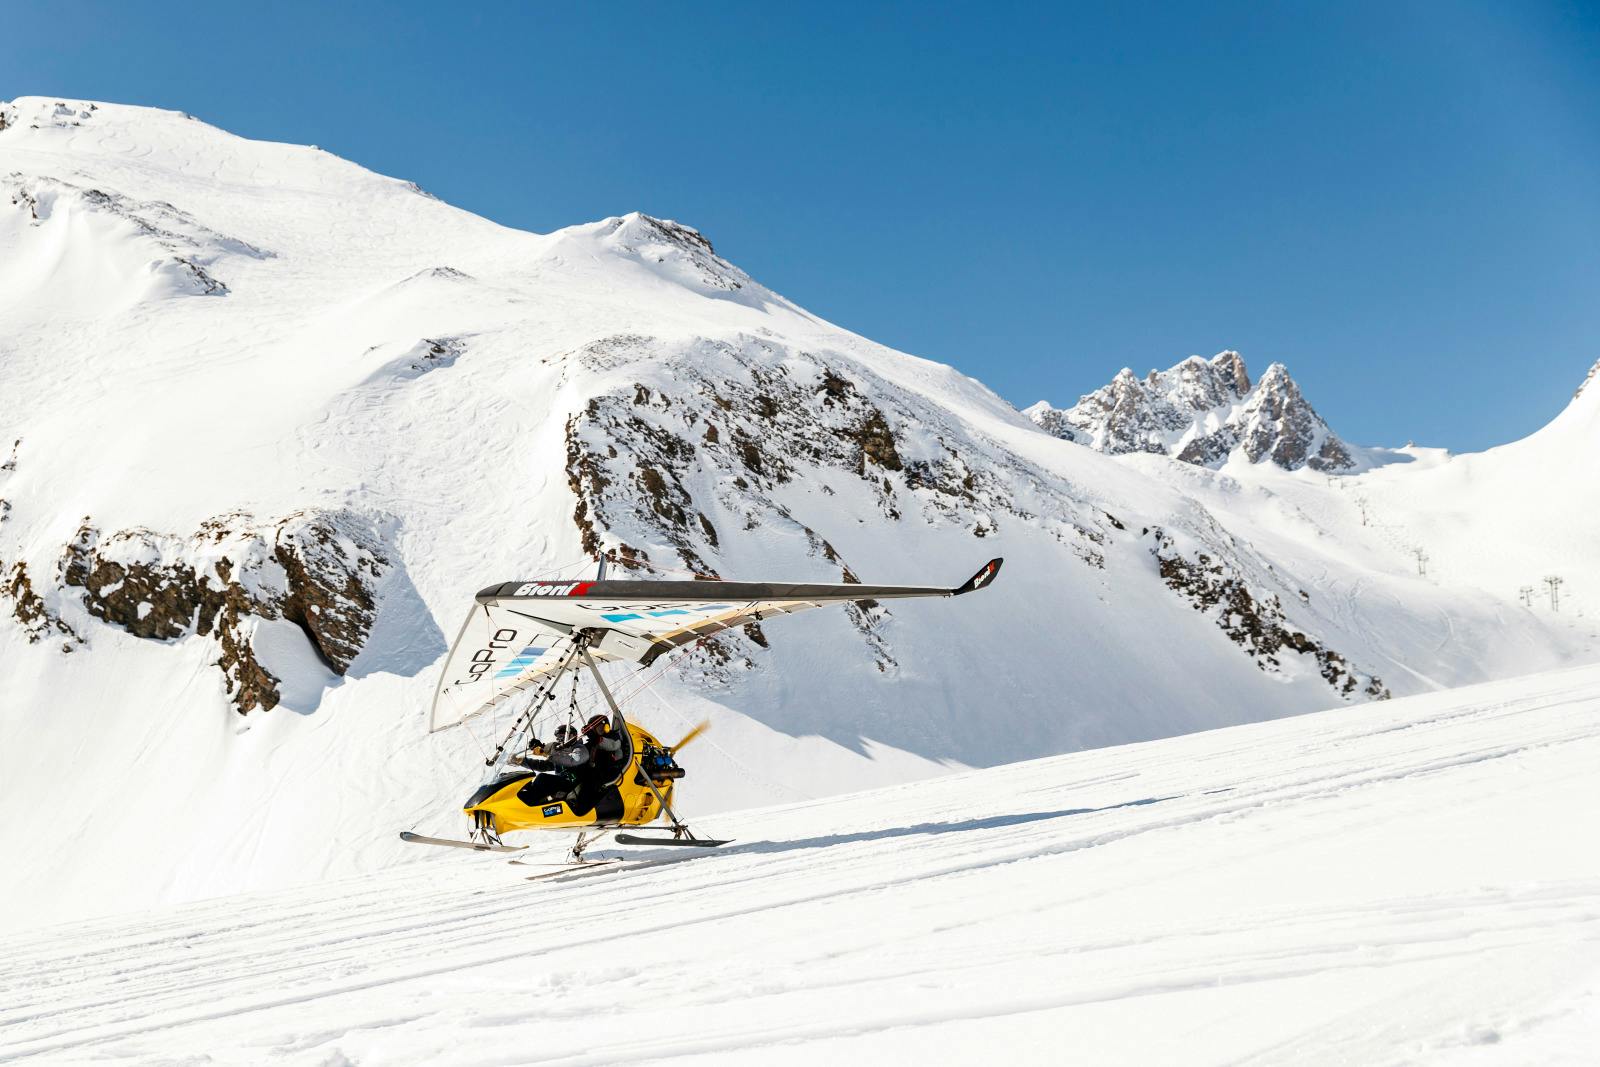 Skiers lifting off on glider at Tignes ski resort